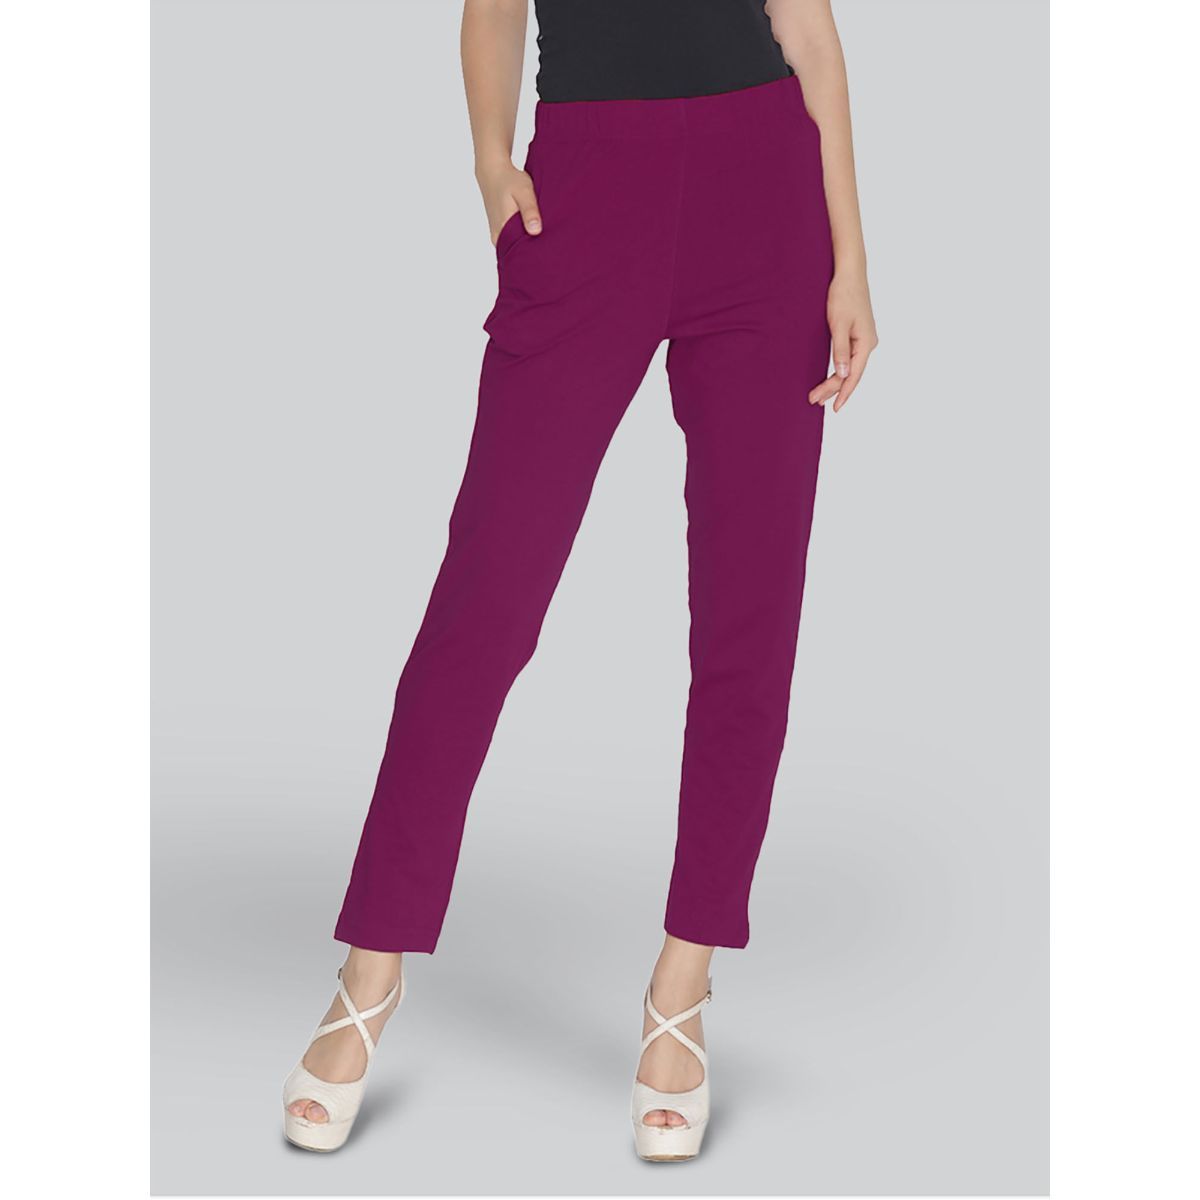 Buy Women's Lavender Purple Straight Fit Trousers Online at Bewakoof